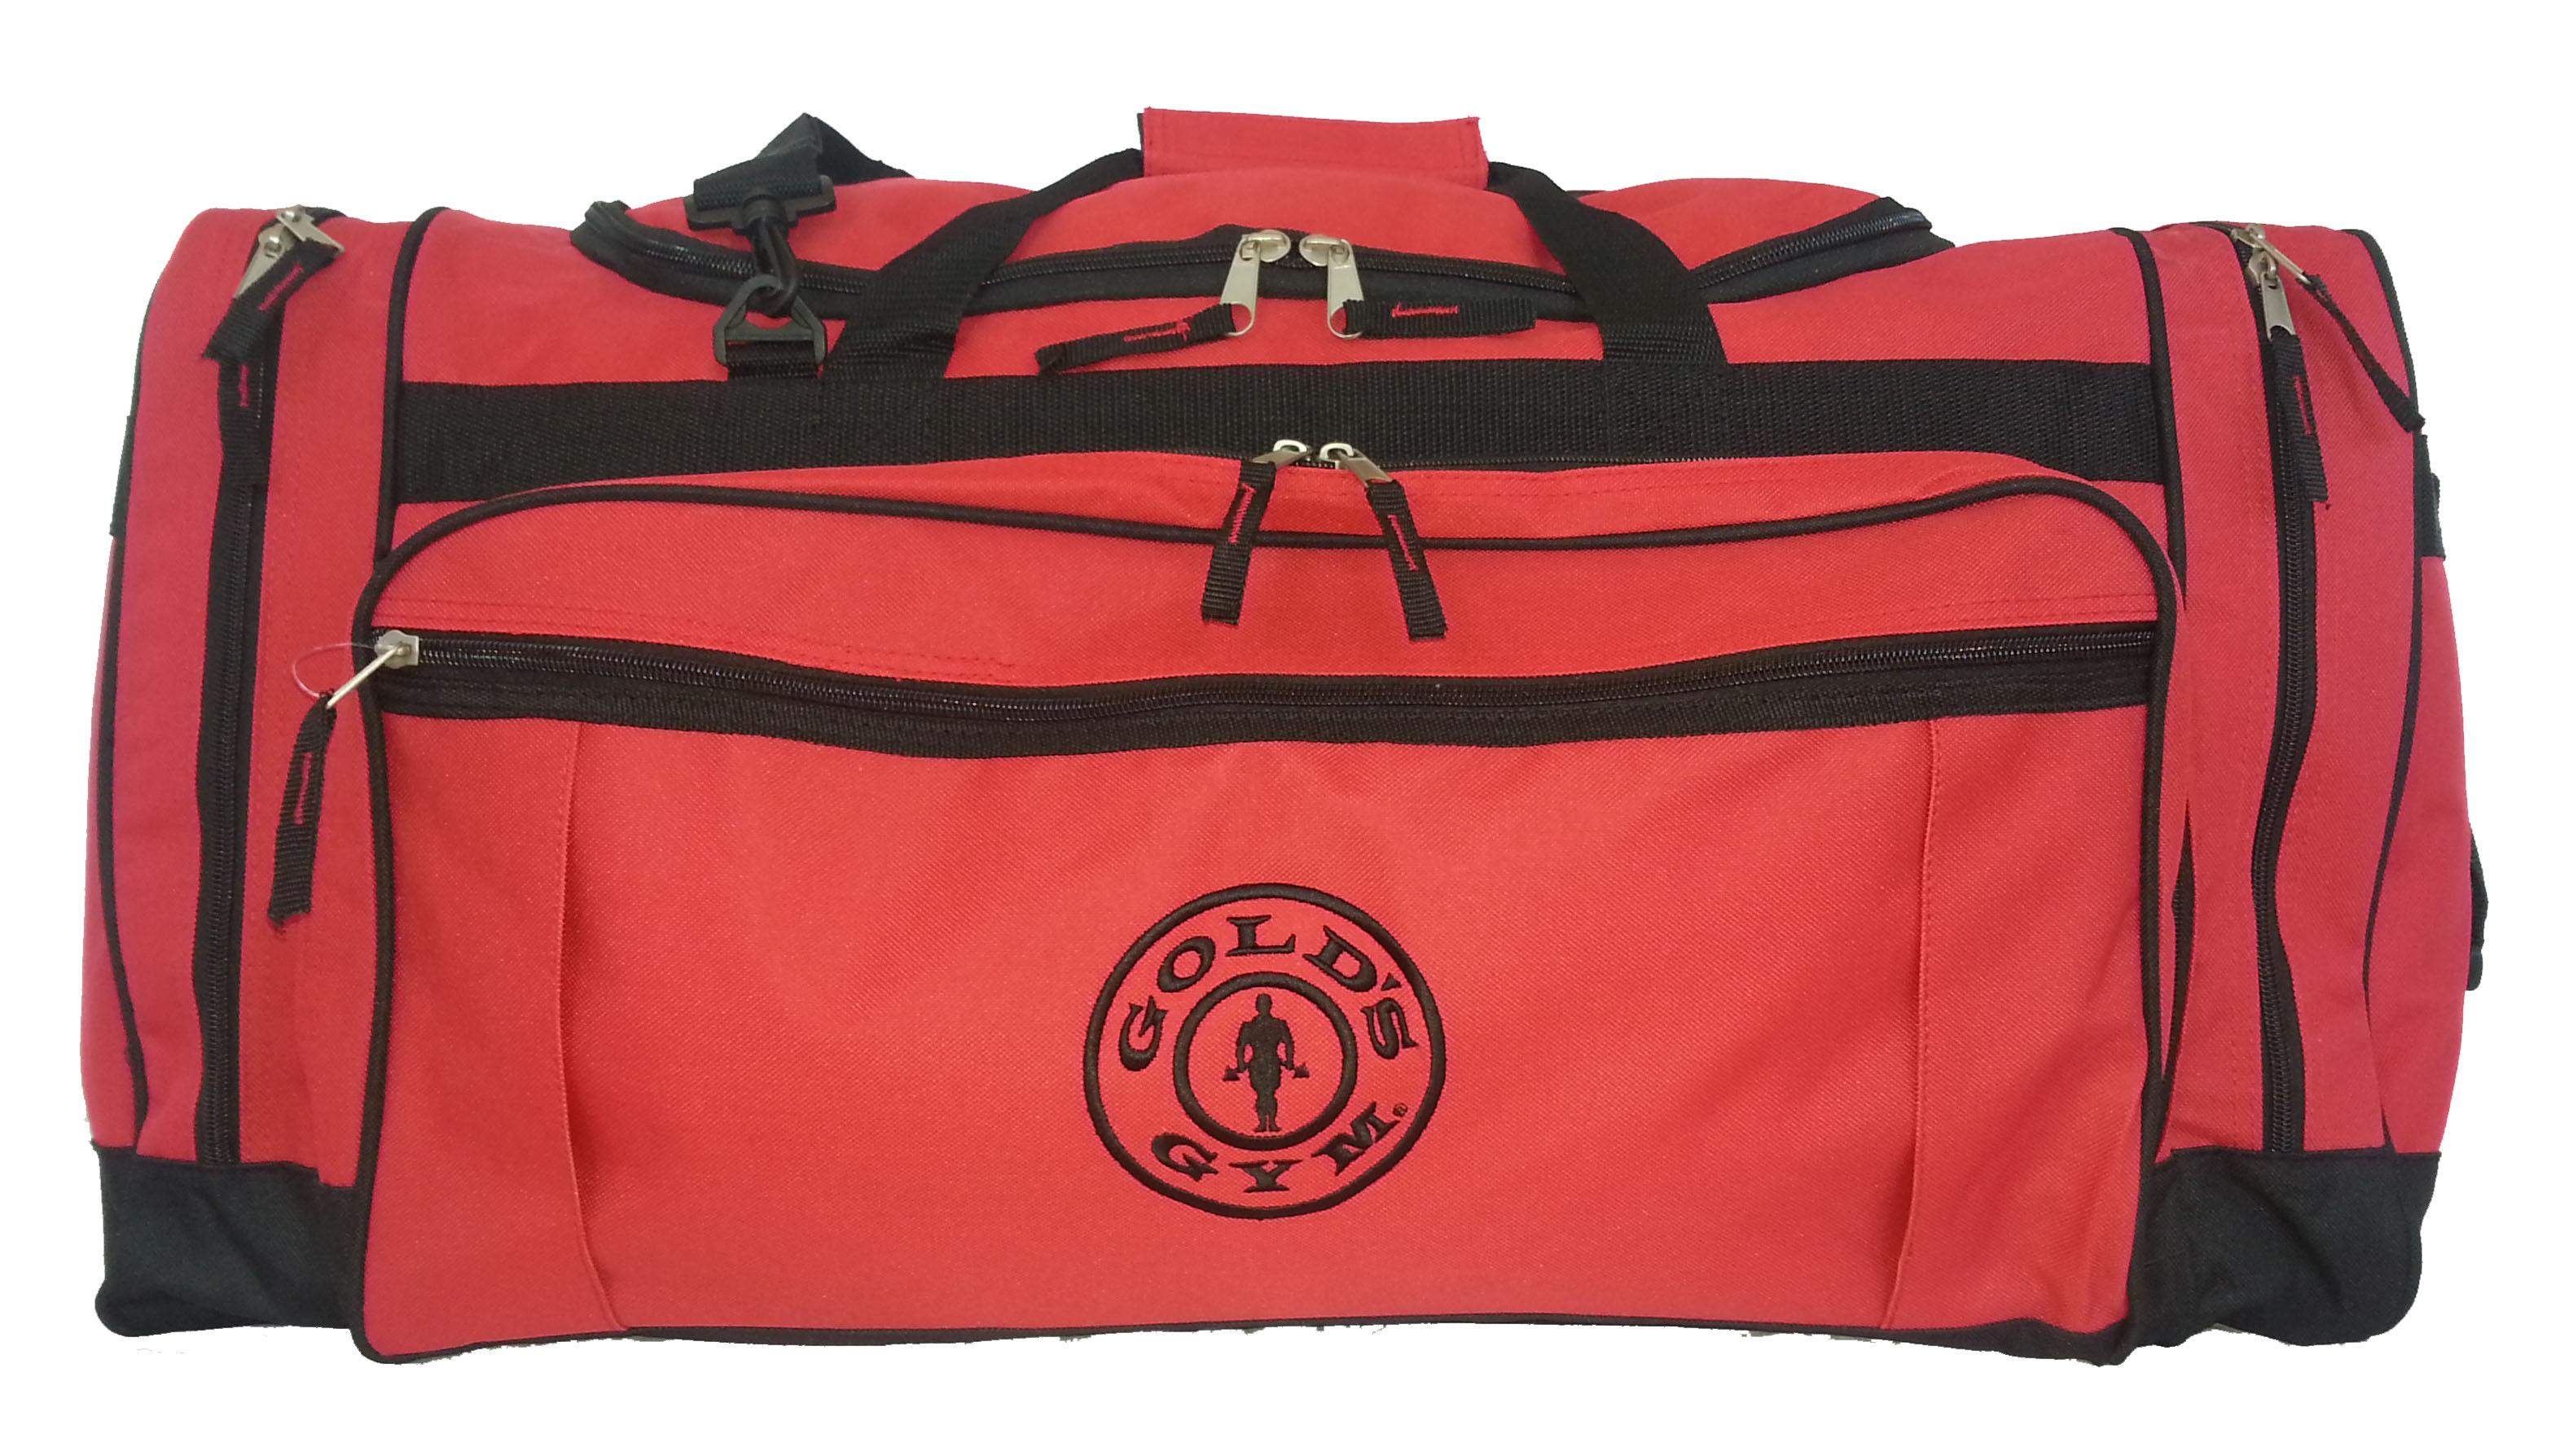 Foto G963 Gold Gym Bag Jumbo Workout Wear Storage Red